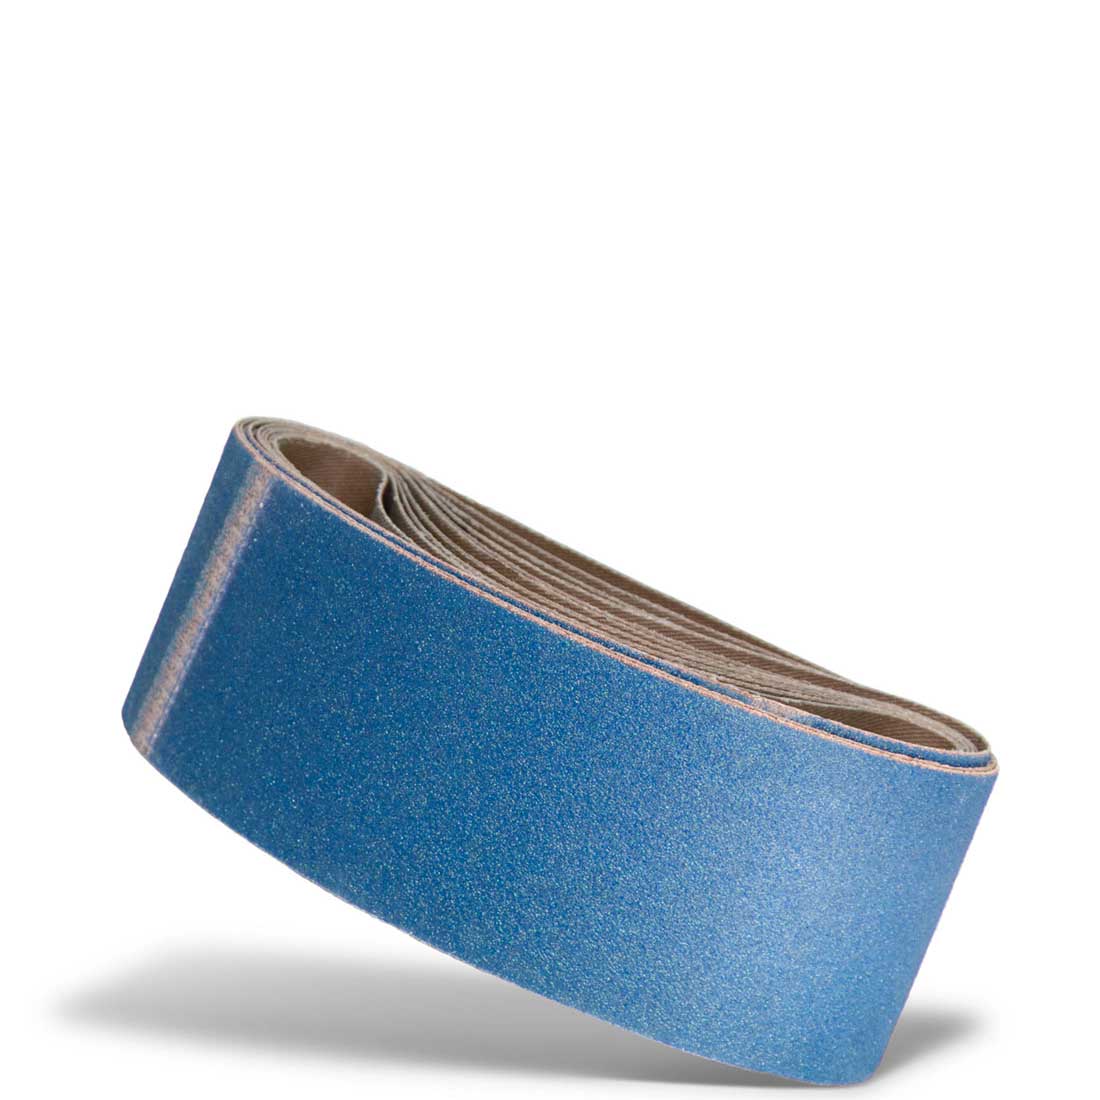 MENZER sanding belts for hand belt sanders, G36–120, 457 x 75 mm / zirconium aluminium oxide